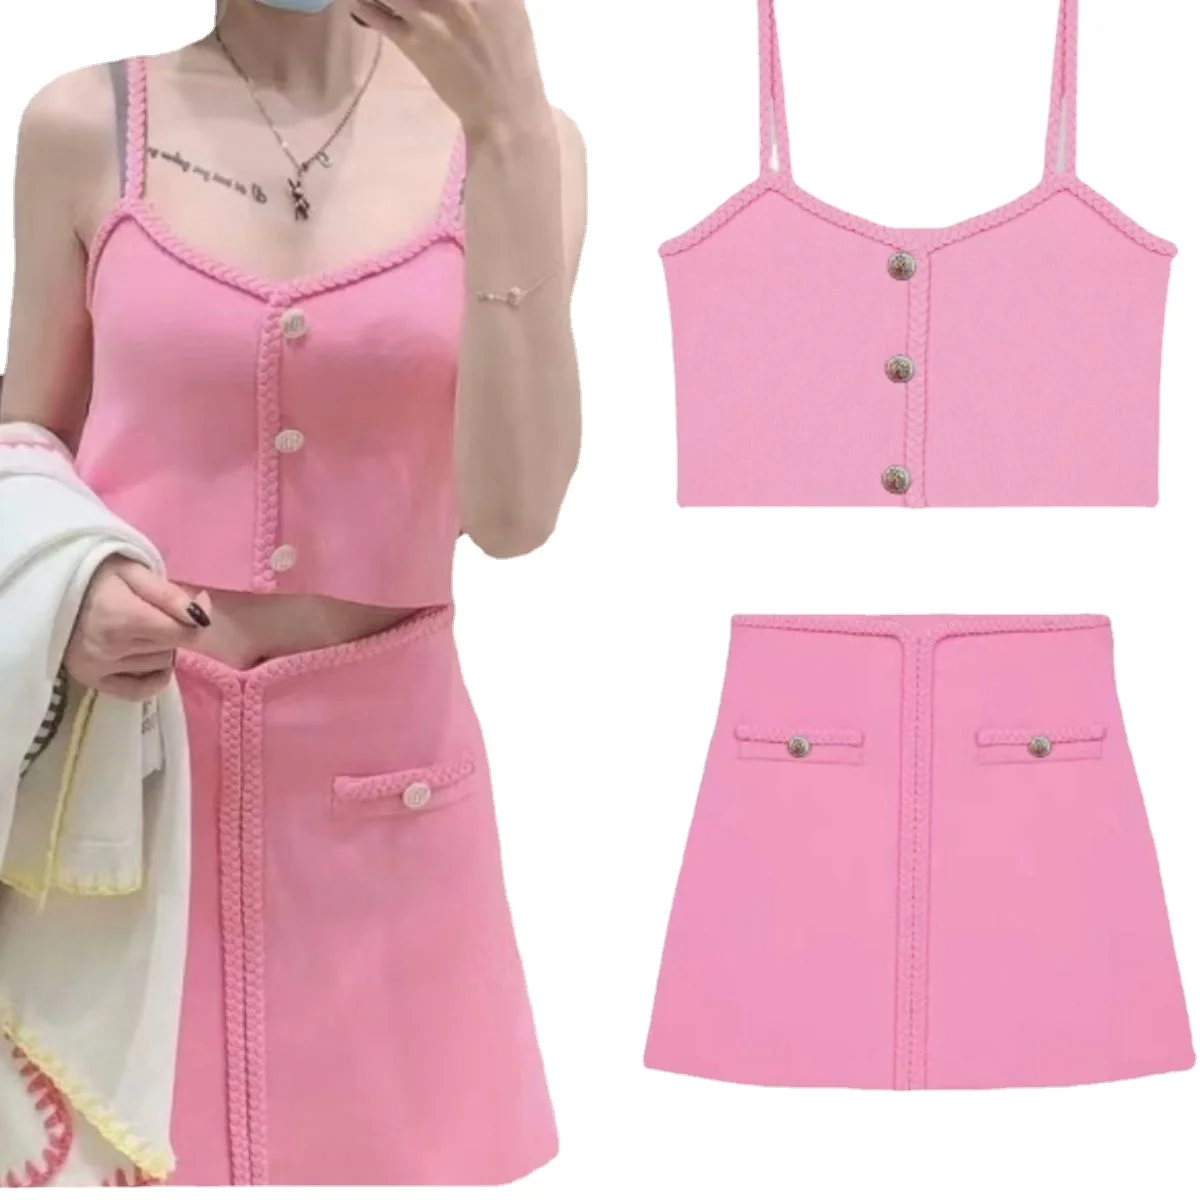 Summer new pink skirt women's vest top fashion all-match slim slim suit